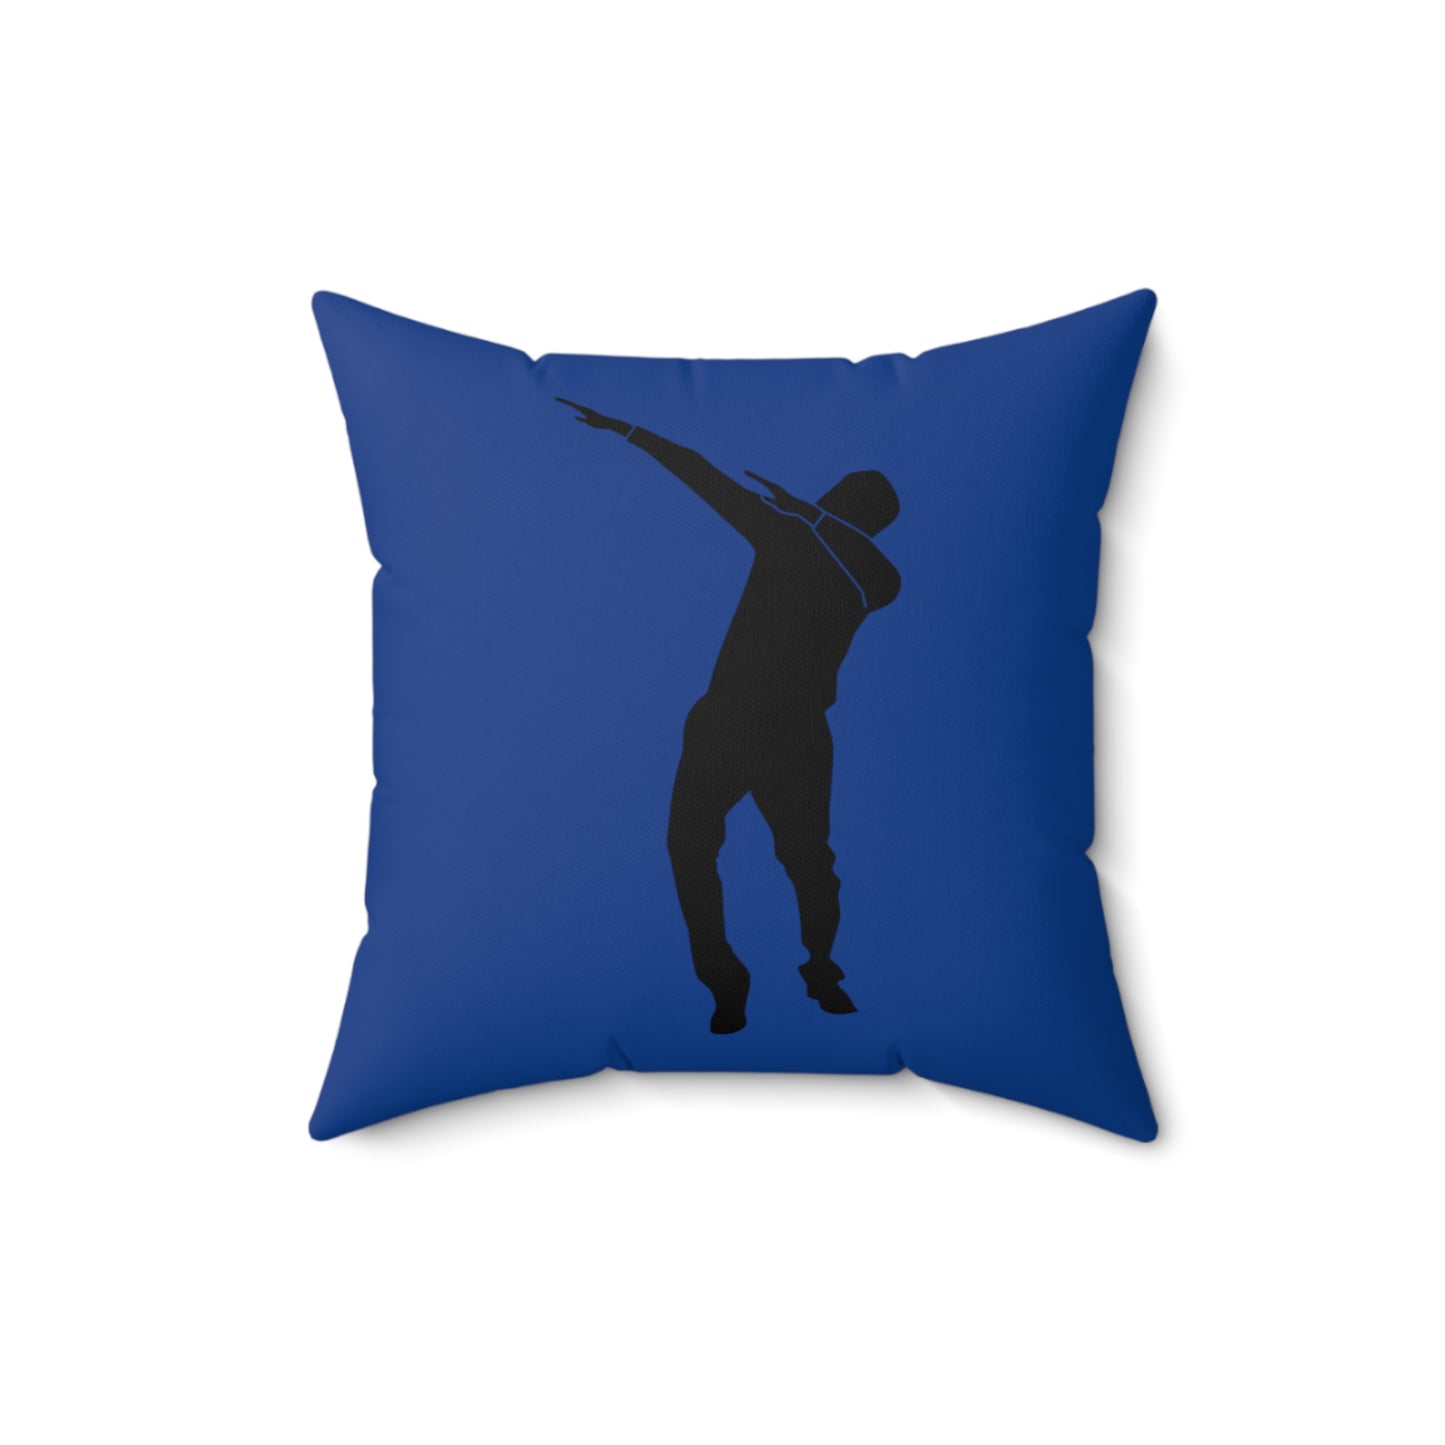 Spun Polyester Square Pillow: Dance Dark Blue